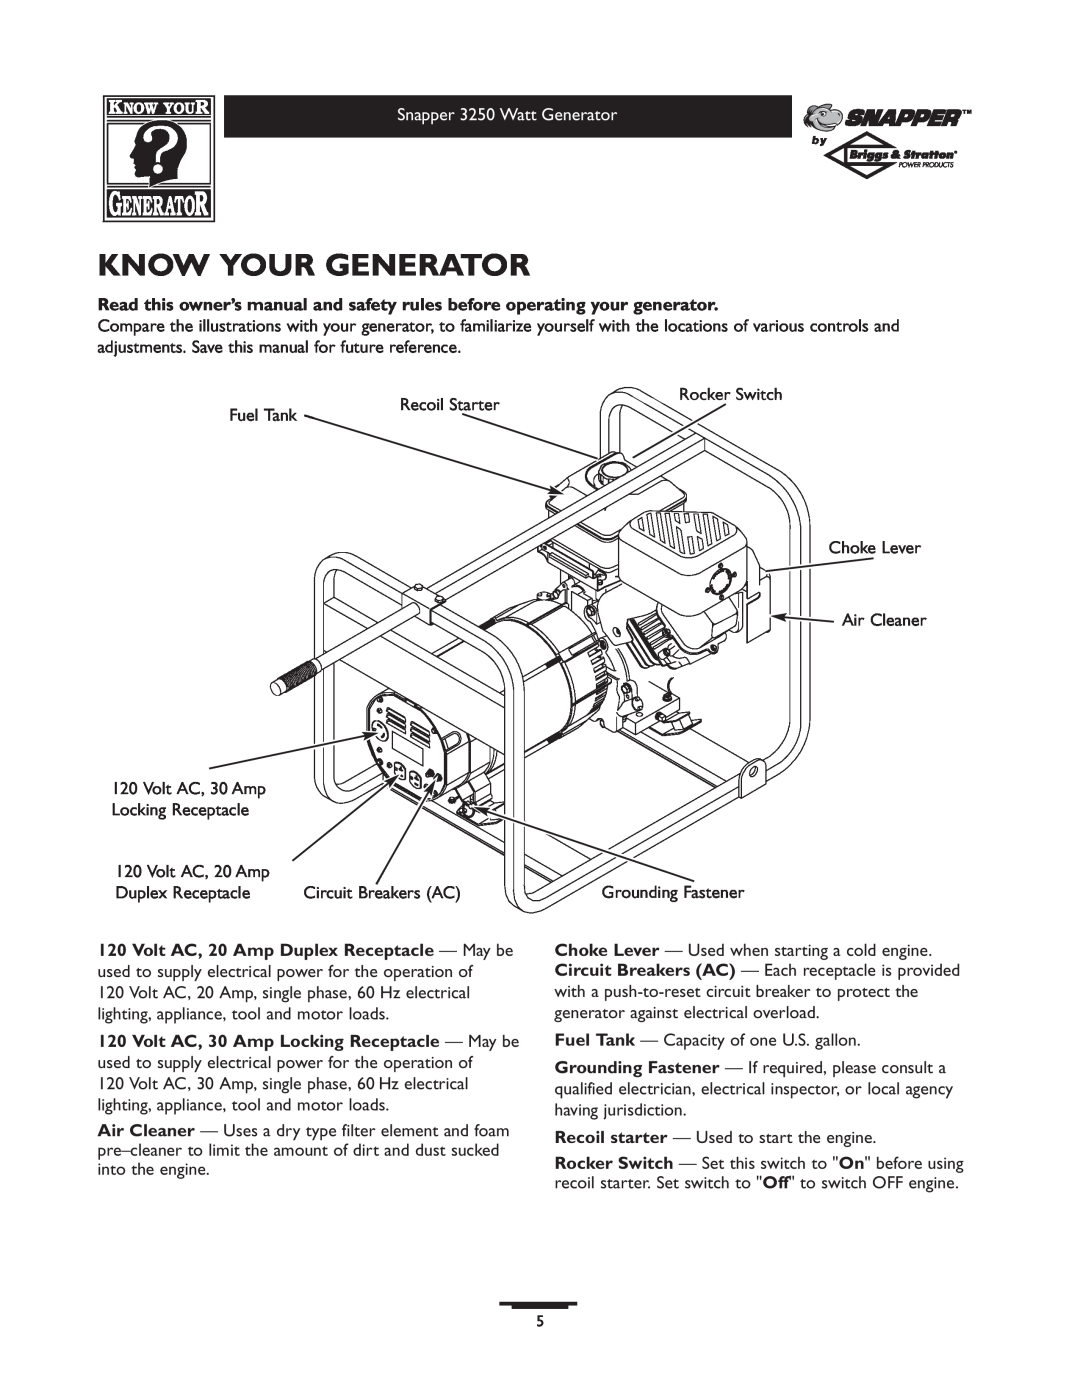 Snapper owner manual Know Your Generator, Snapper 3250 Watt Generator 